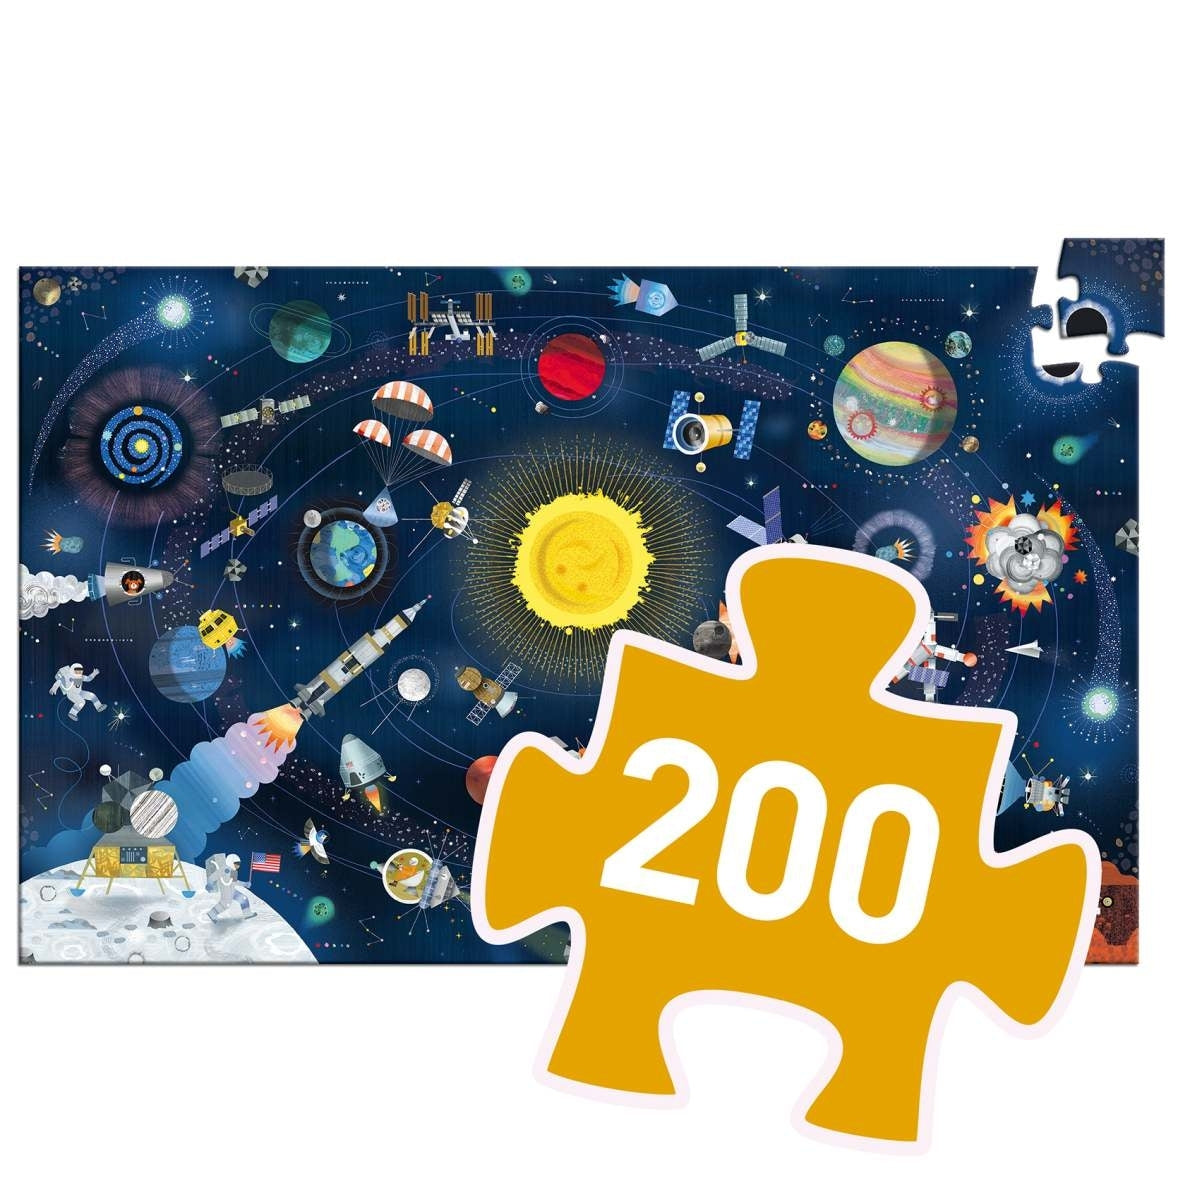 Puzzle Observation 200 Teile Der Weltraum | Djeco